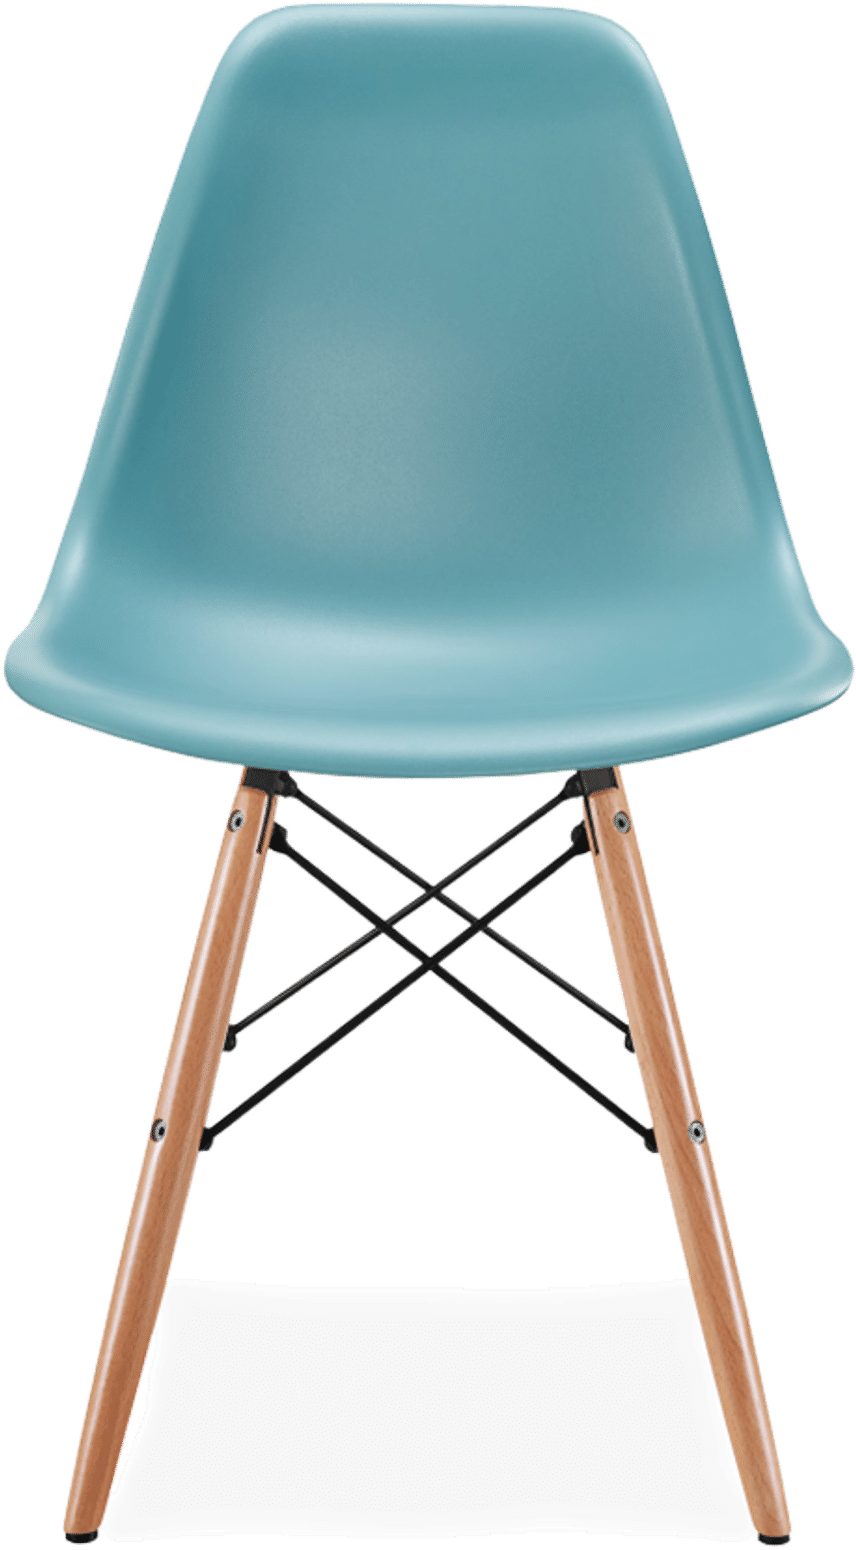 DSW-stoel Teal/Light Wood image.